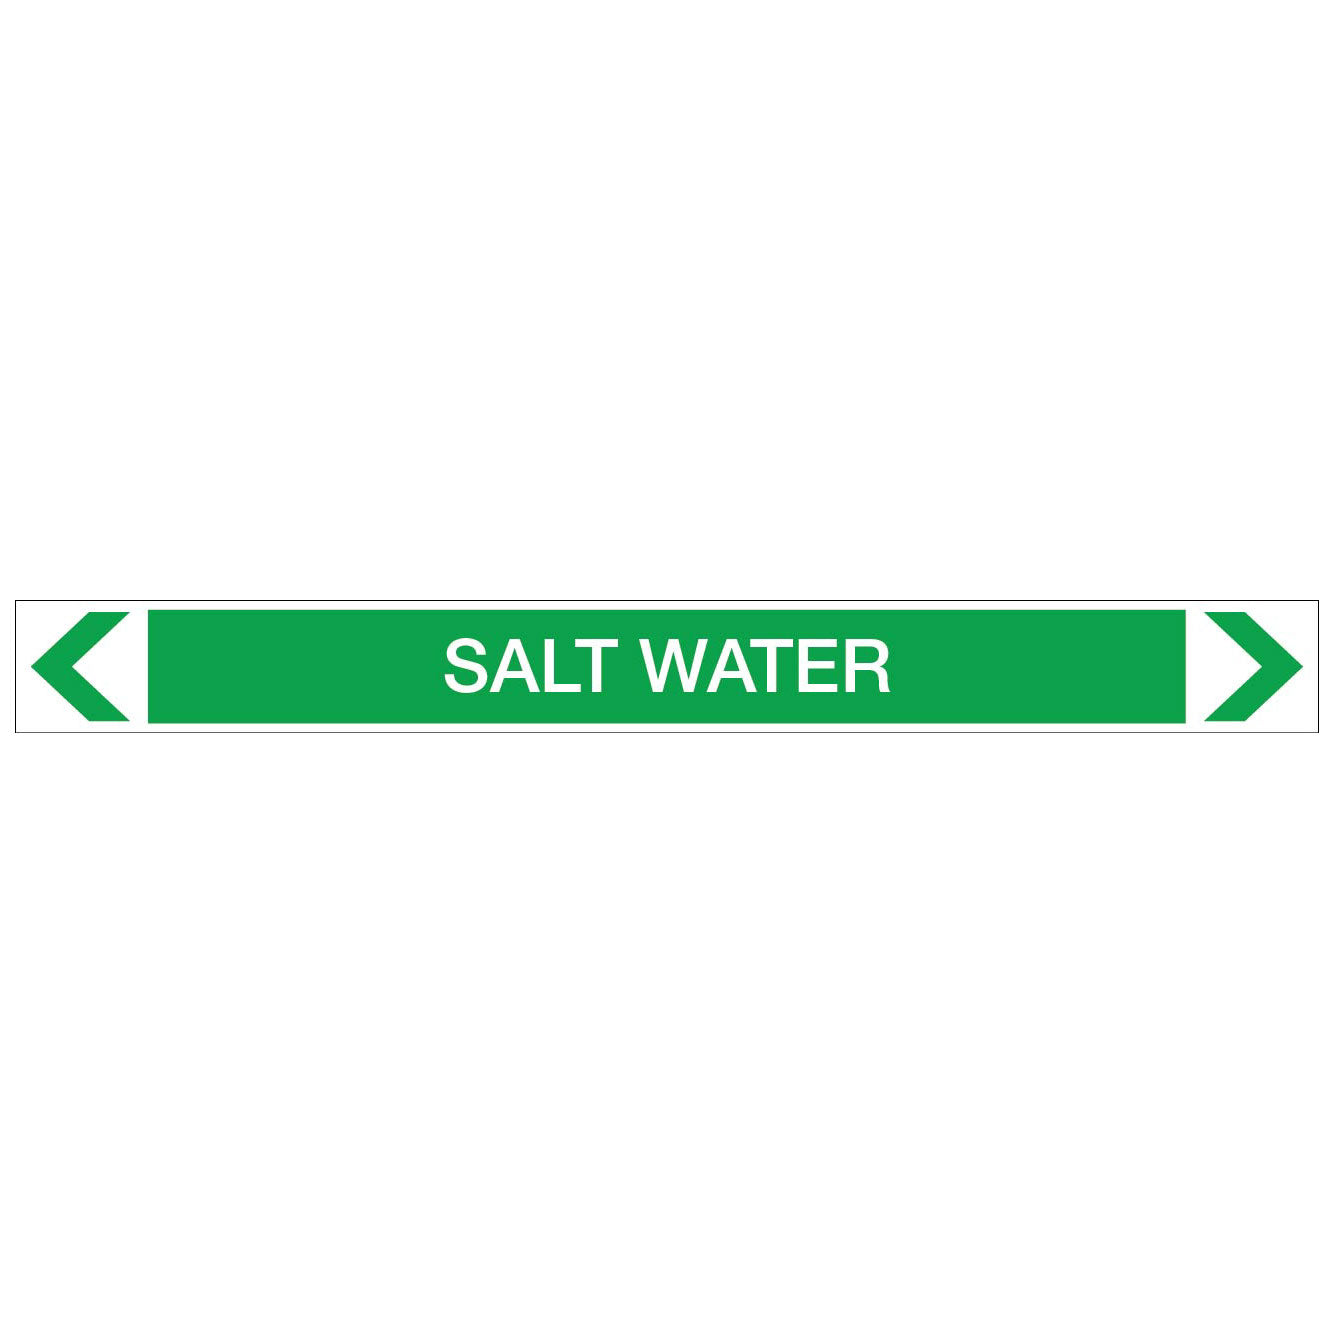 Water - Salt Water - Pipe Marker Sticker